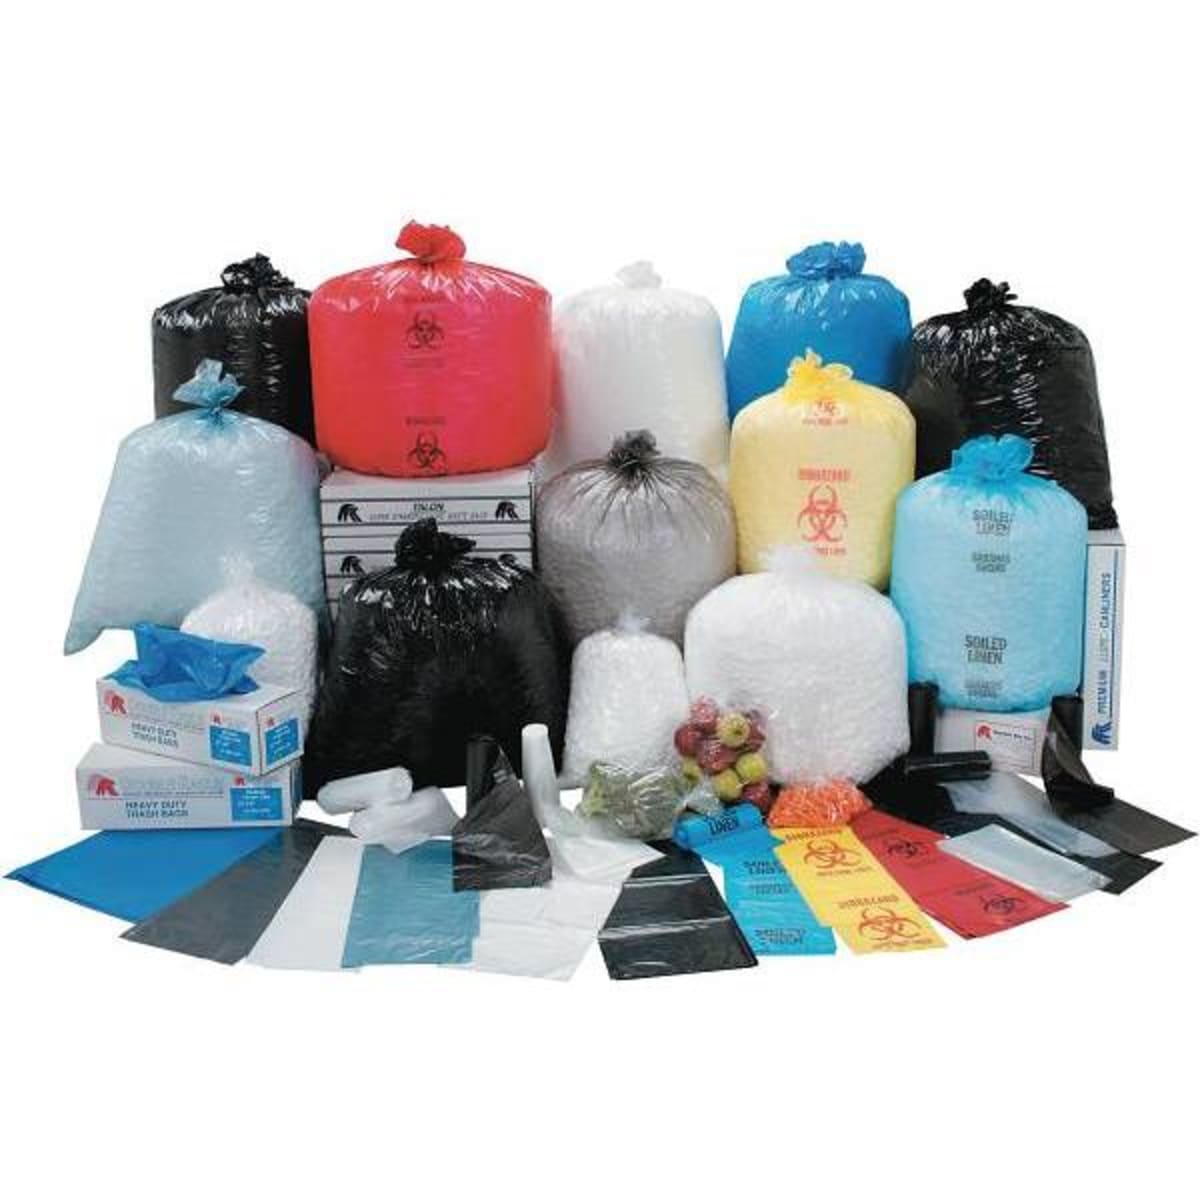 Maintenance Warehouse® 31-33 Gal 15 Mic High-Density Trash Bag (250 Pack)  (Clear)